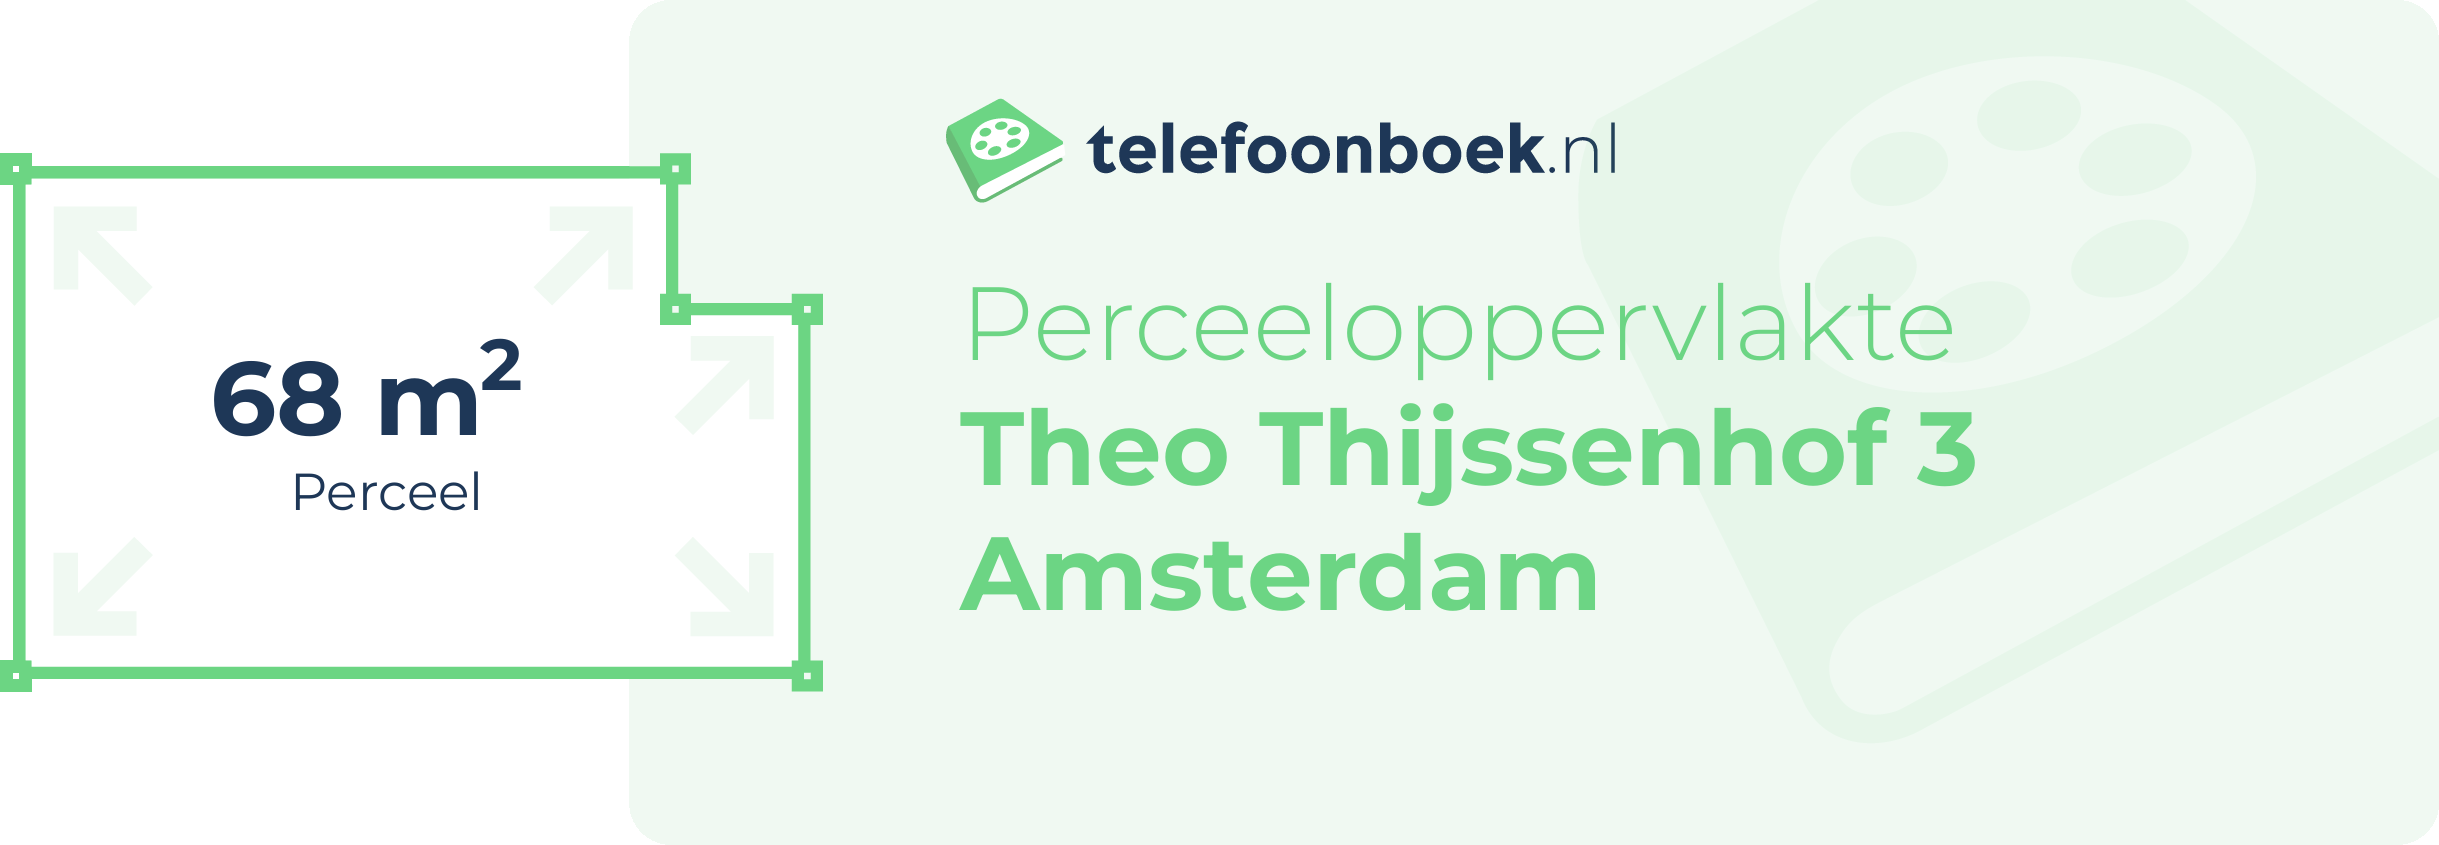 Perceeloppervlakte Theo Thijssenhof 3 Amsterdam